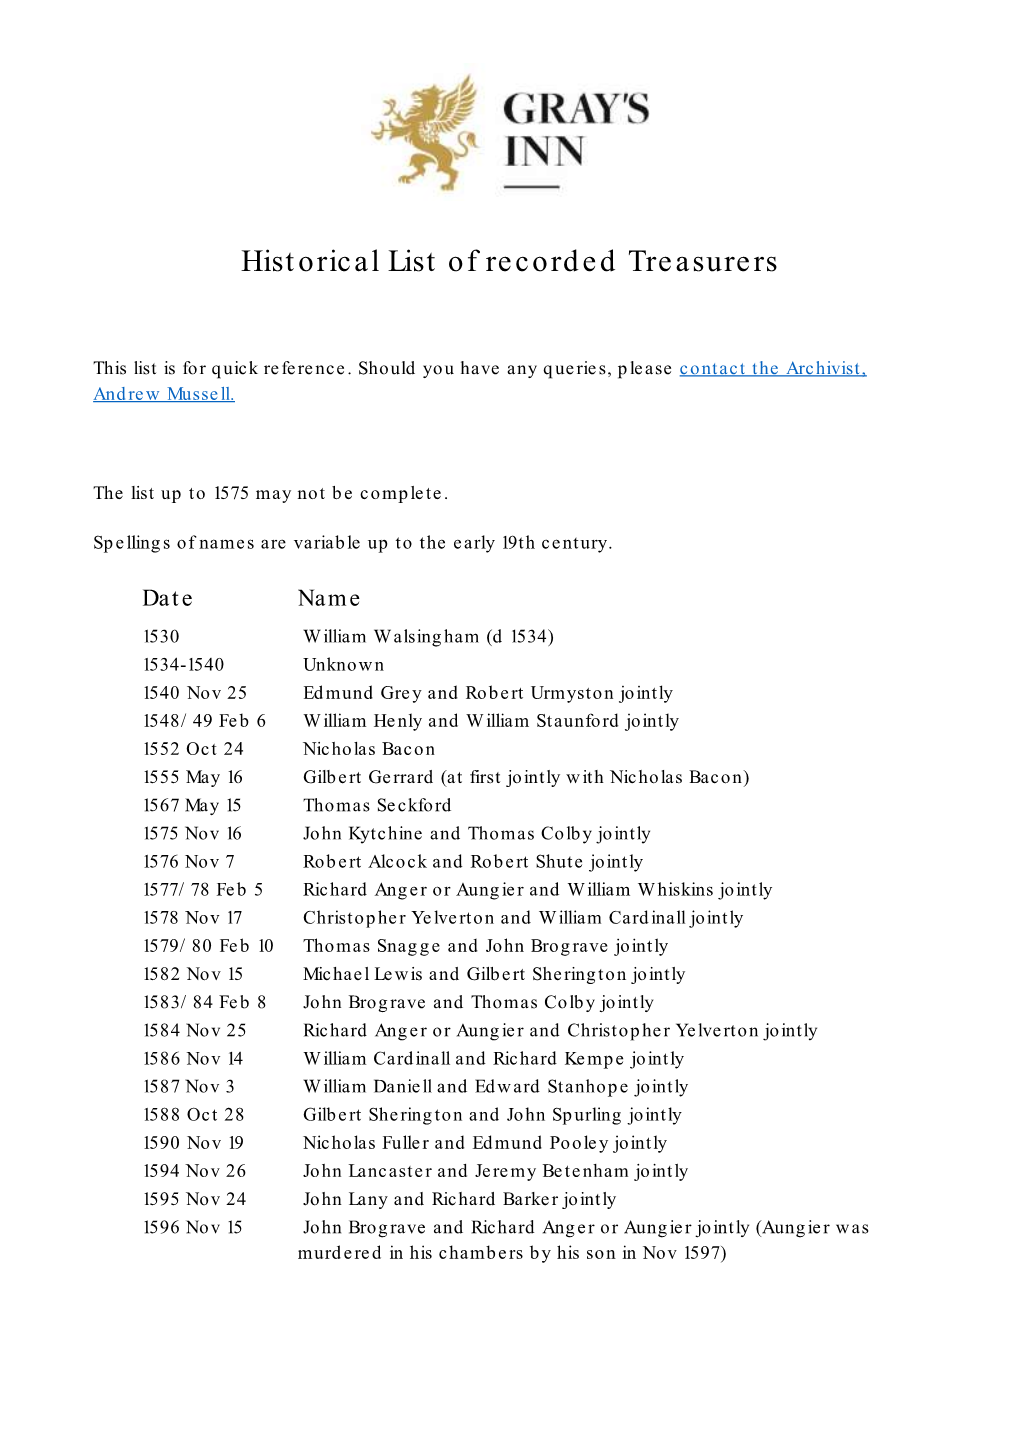 Historical List of Recorded Treasurers